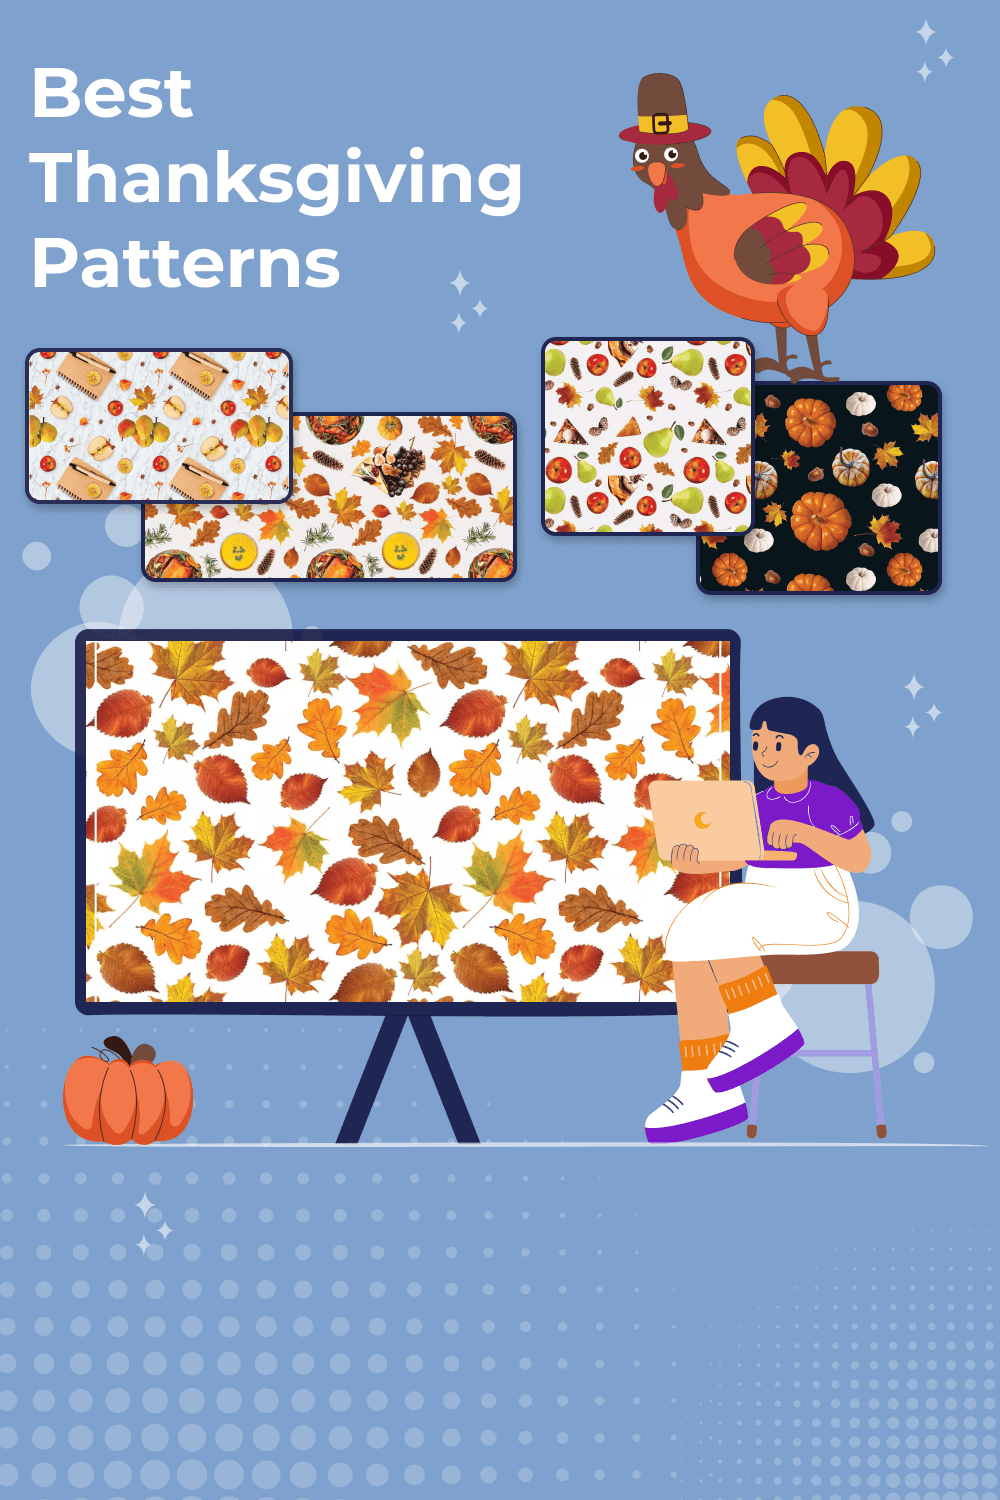 best thanksgiving patterns pinterest.